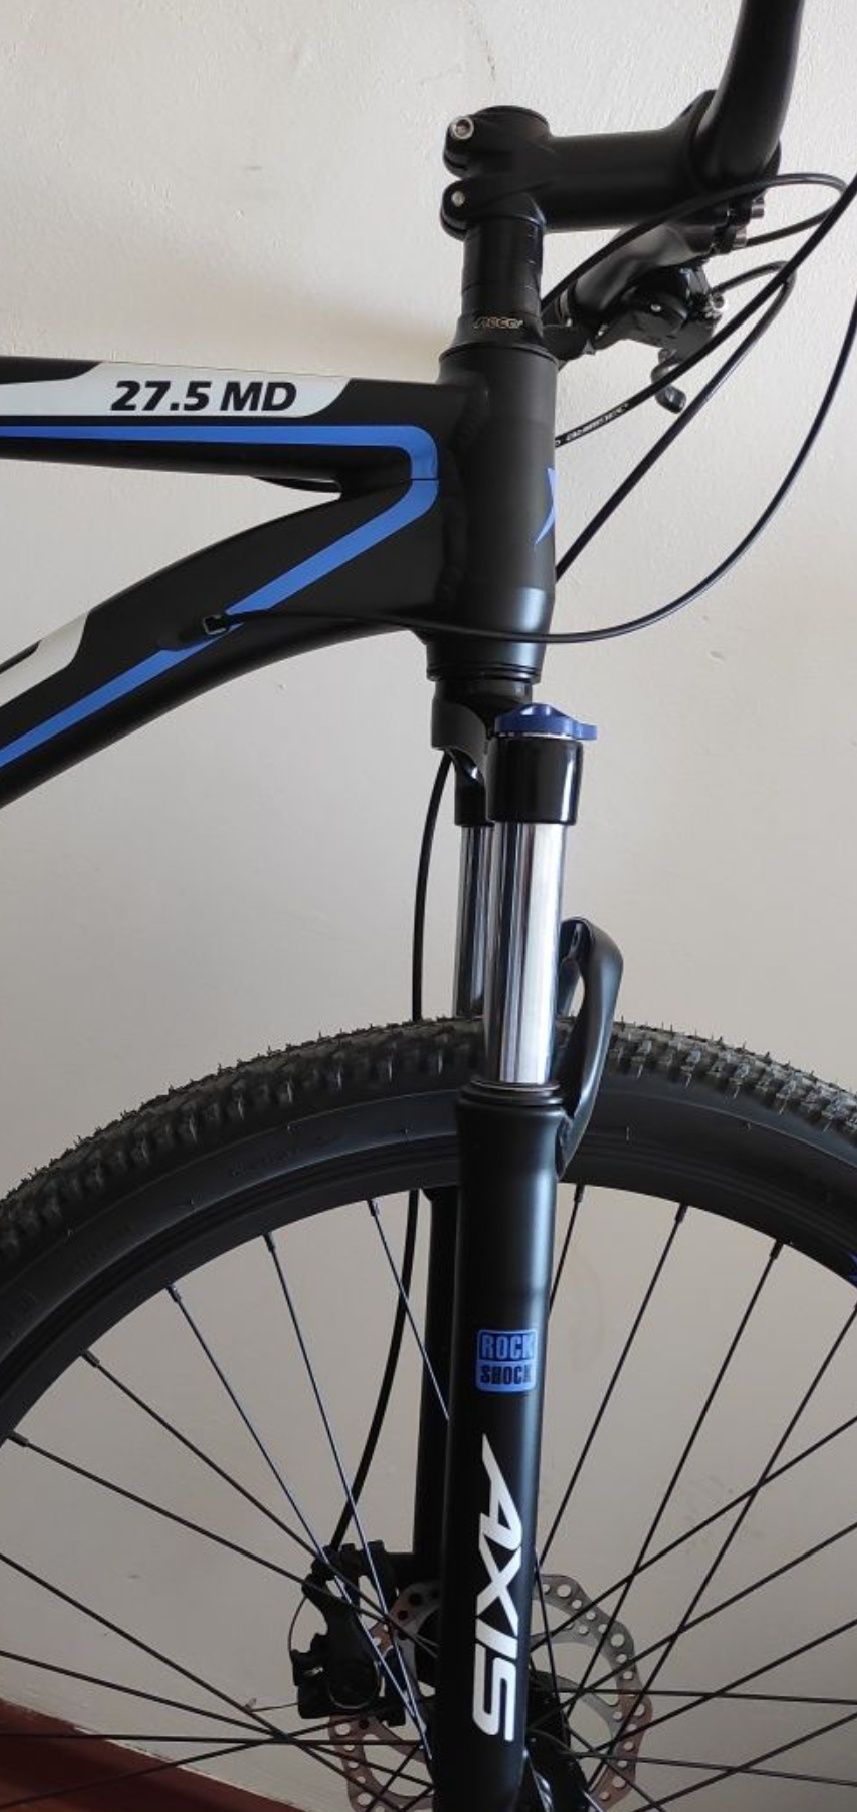 Велосипед AXIS MD 27.5 Калеса 18 рама Черно синий цвет